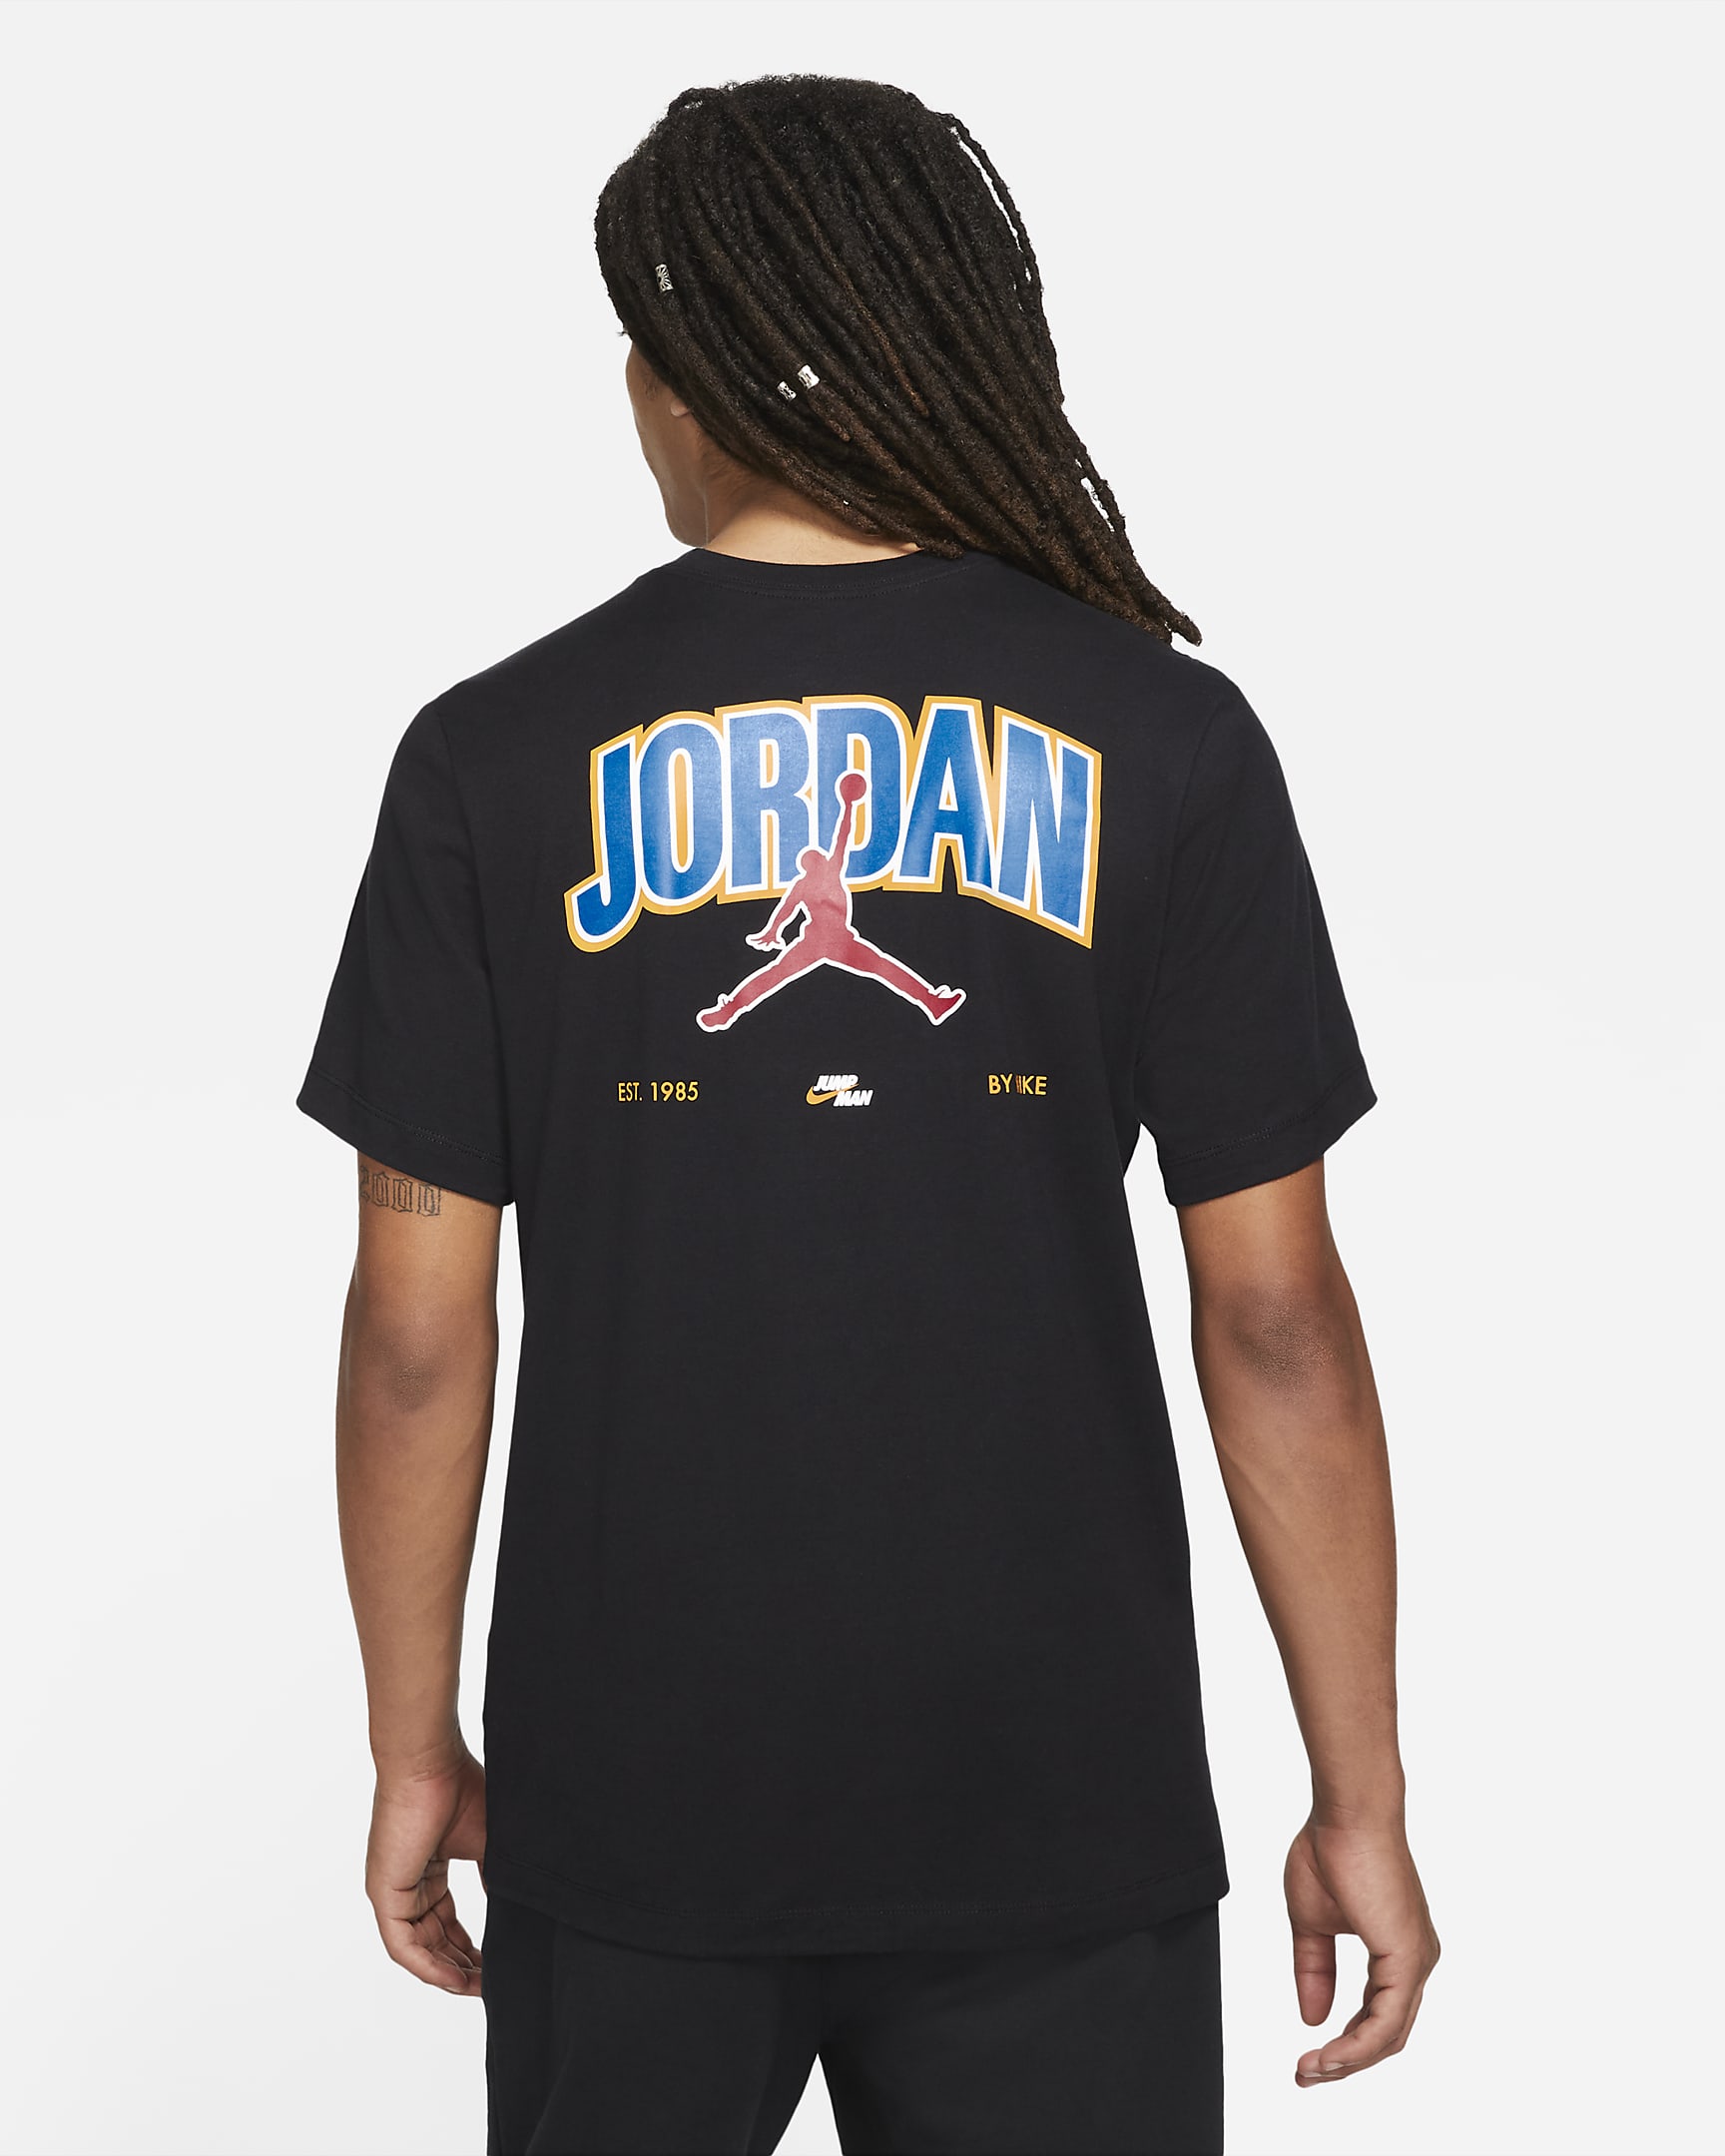 Jordan Brand will be reissuing their classic Air Jordan 12 Retro "Taxi"